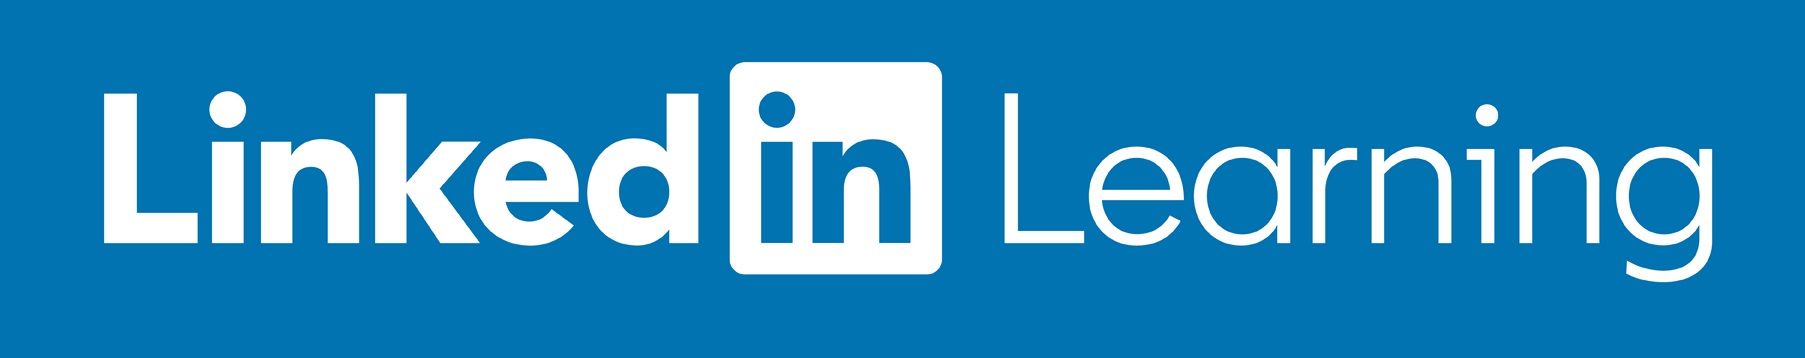 Login-with-LinkedIn, Porter